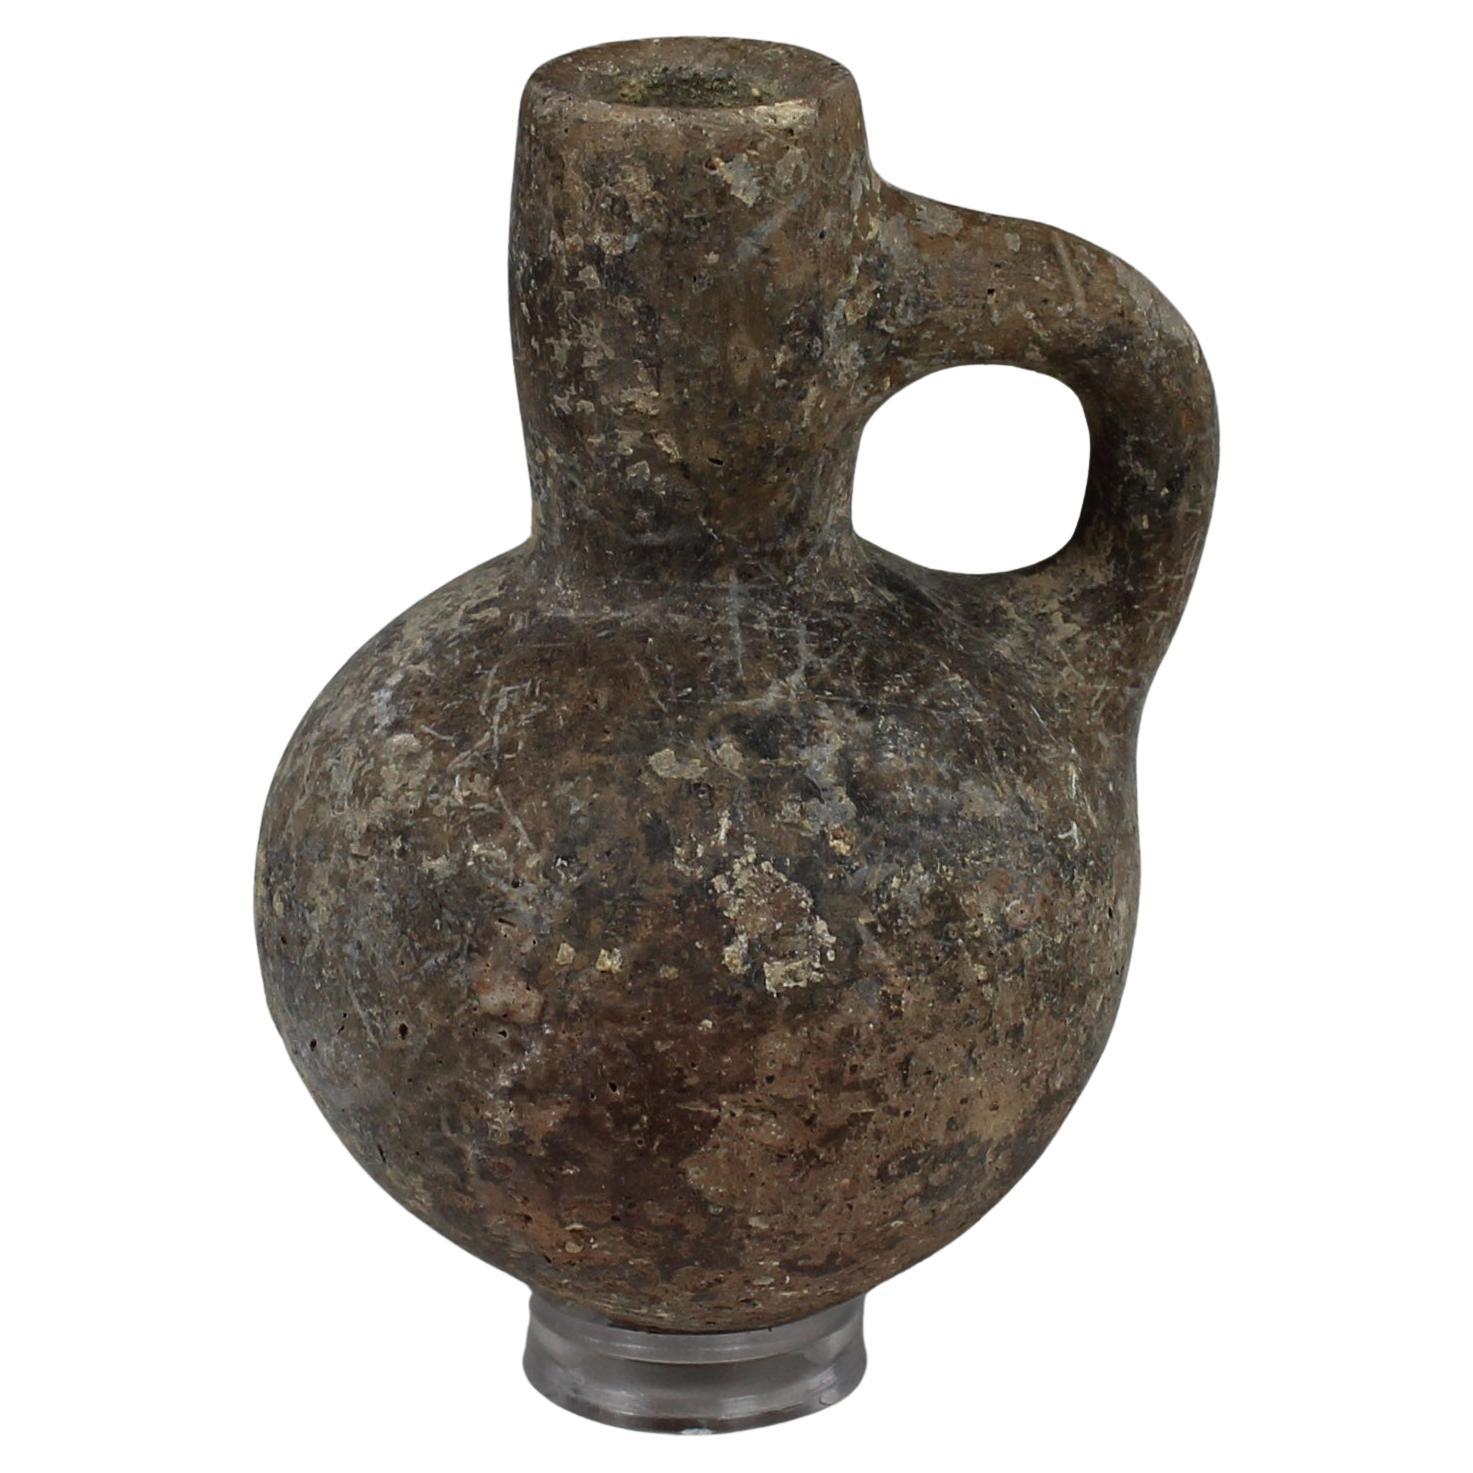 Iron Age black juglet